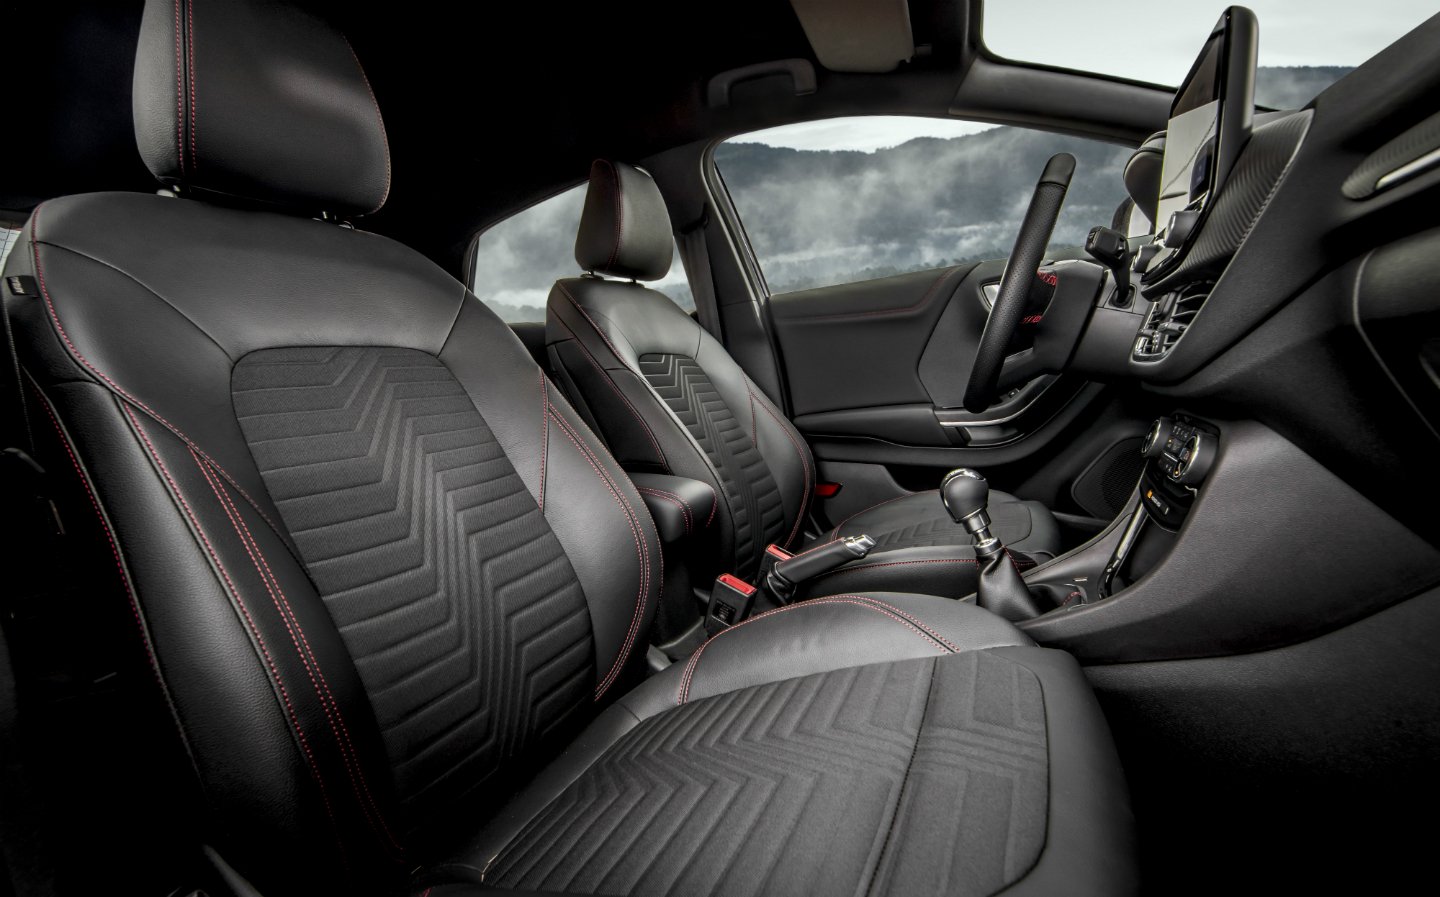 Ford Puma interior - Seats